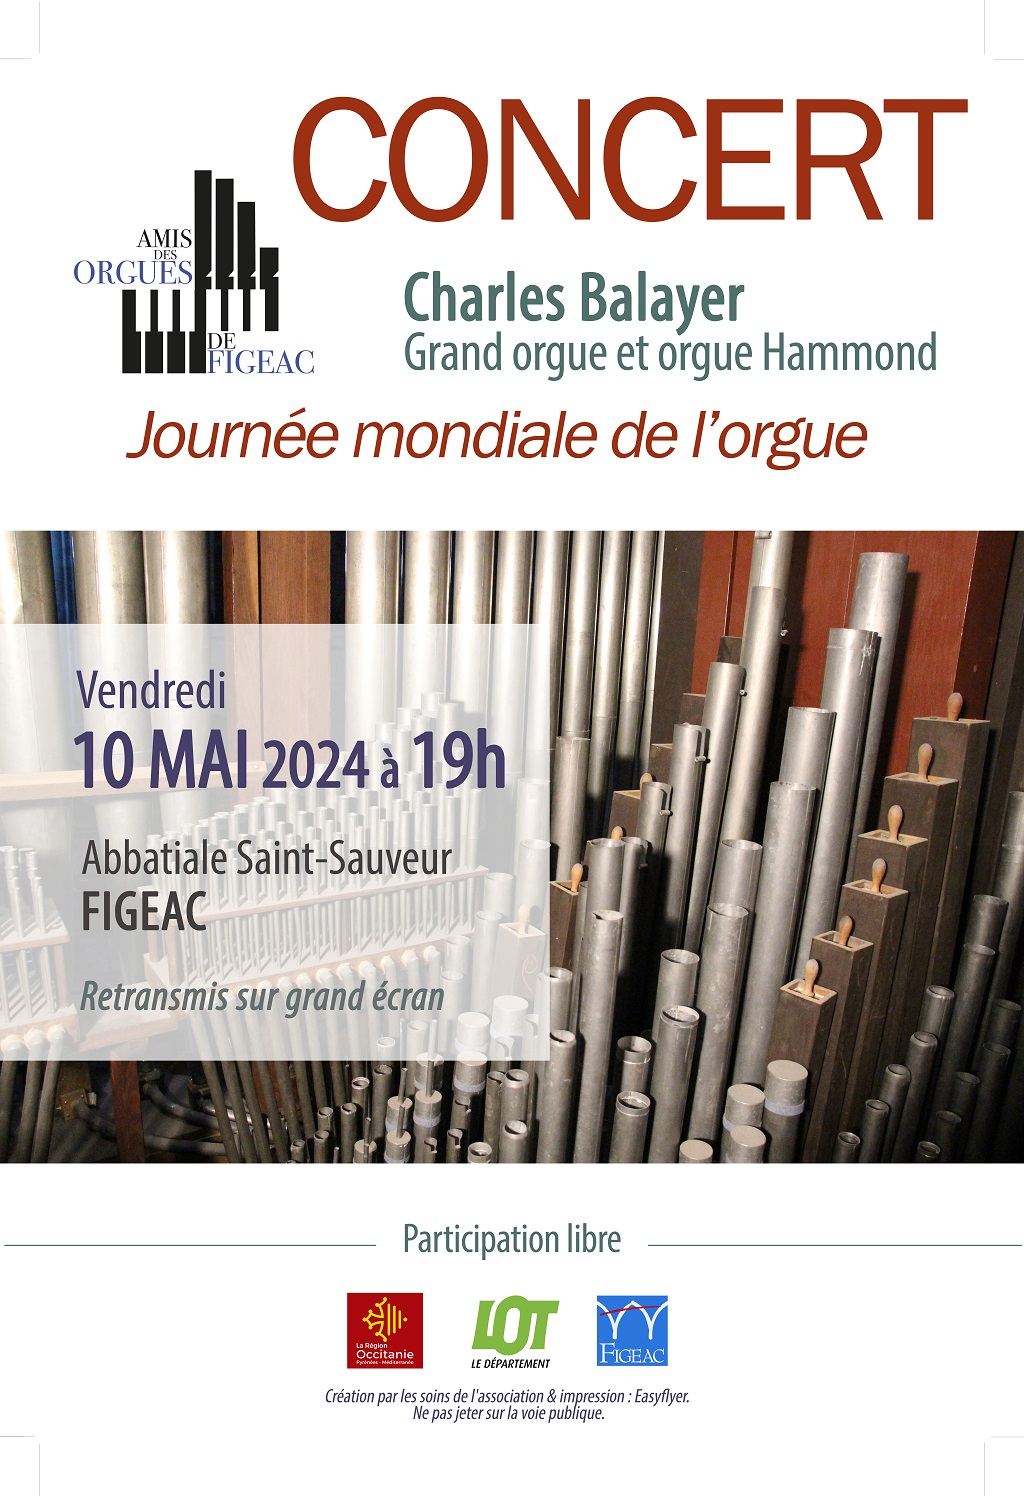 Concert "Charles Balayer - Grand orgue et orgue Hammond" Le 10 mai 2024